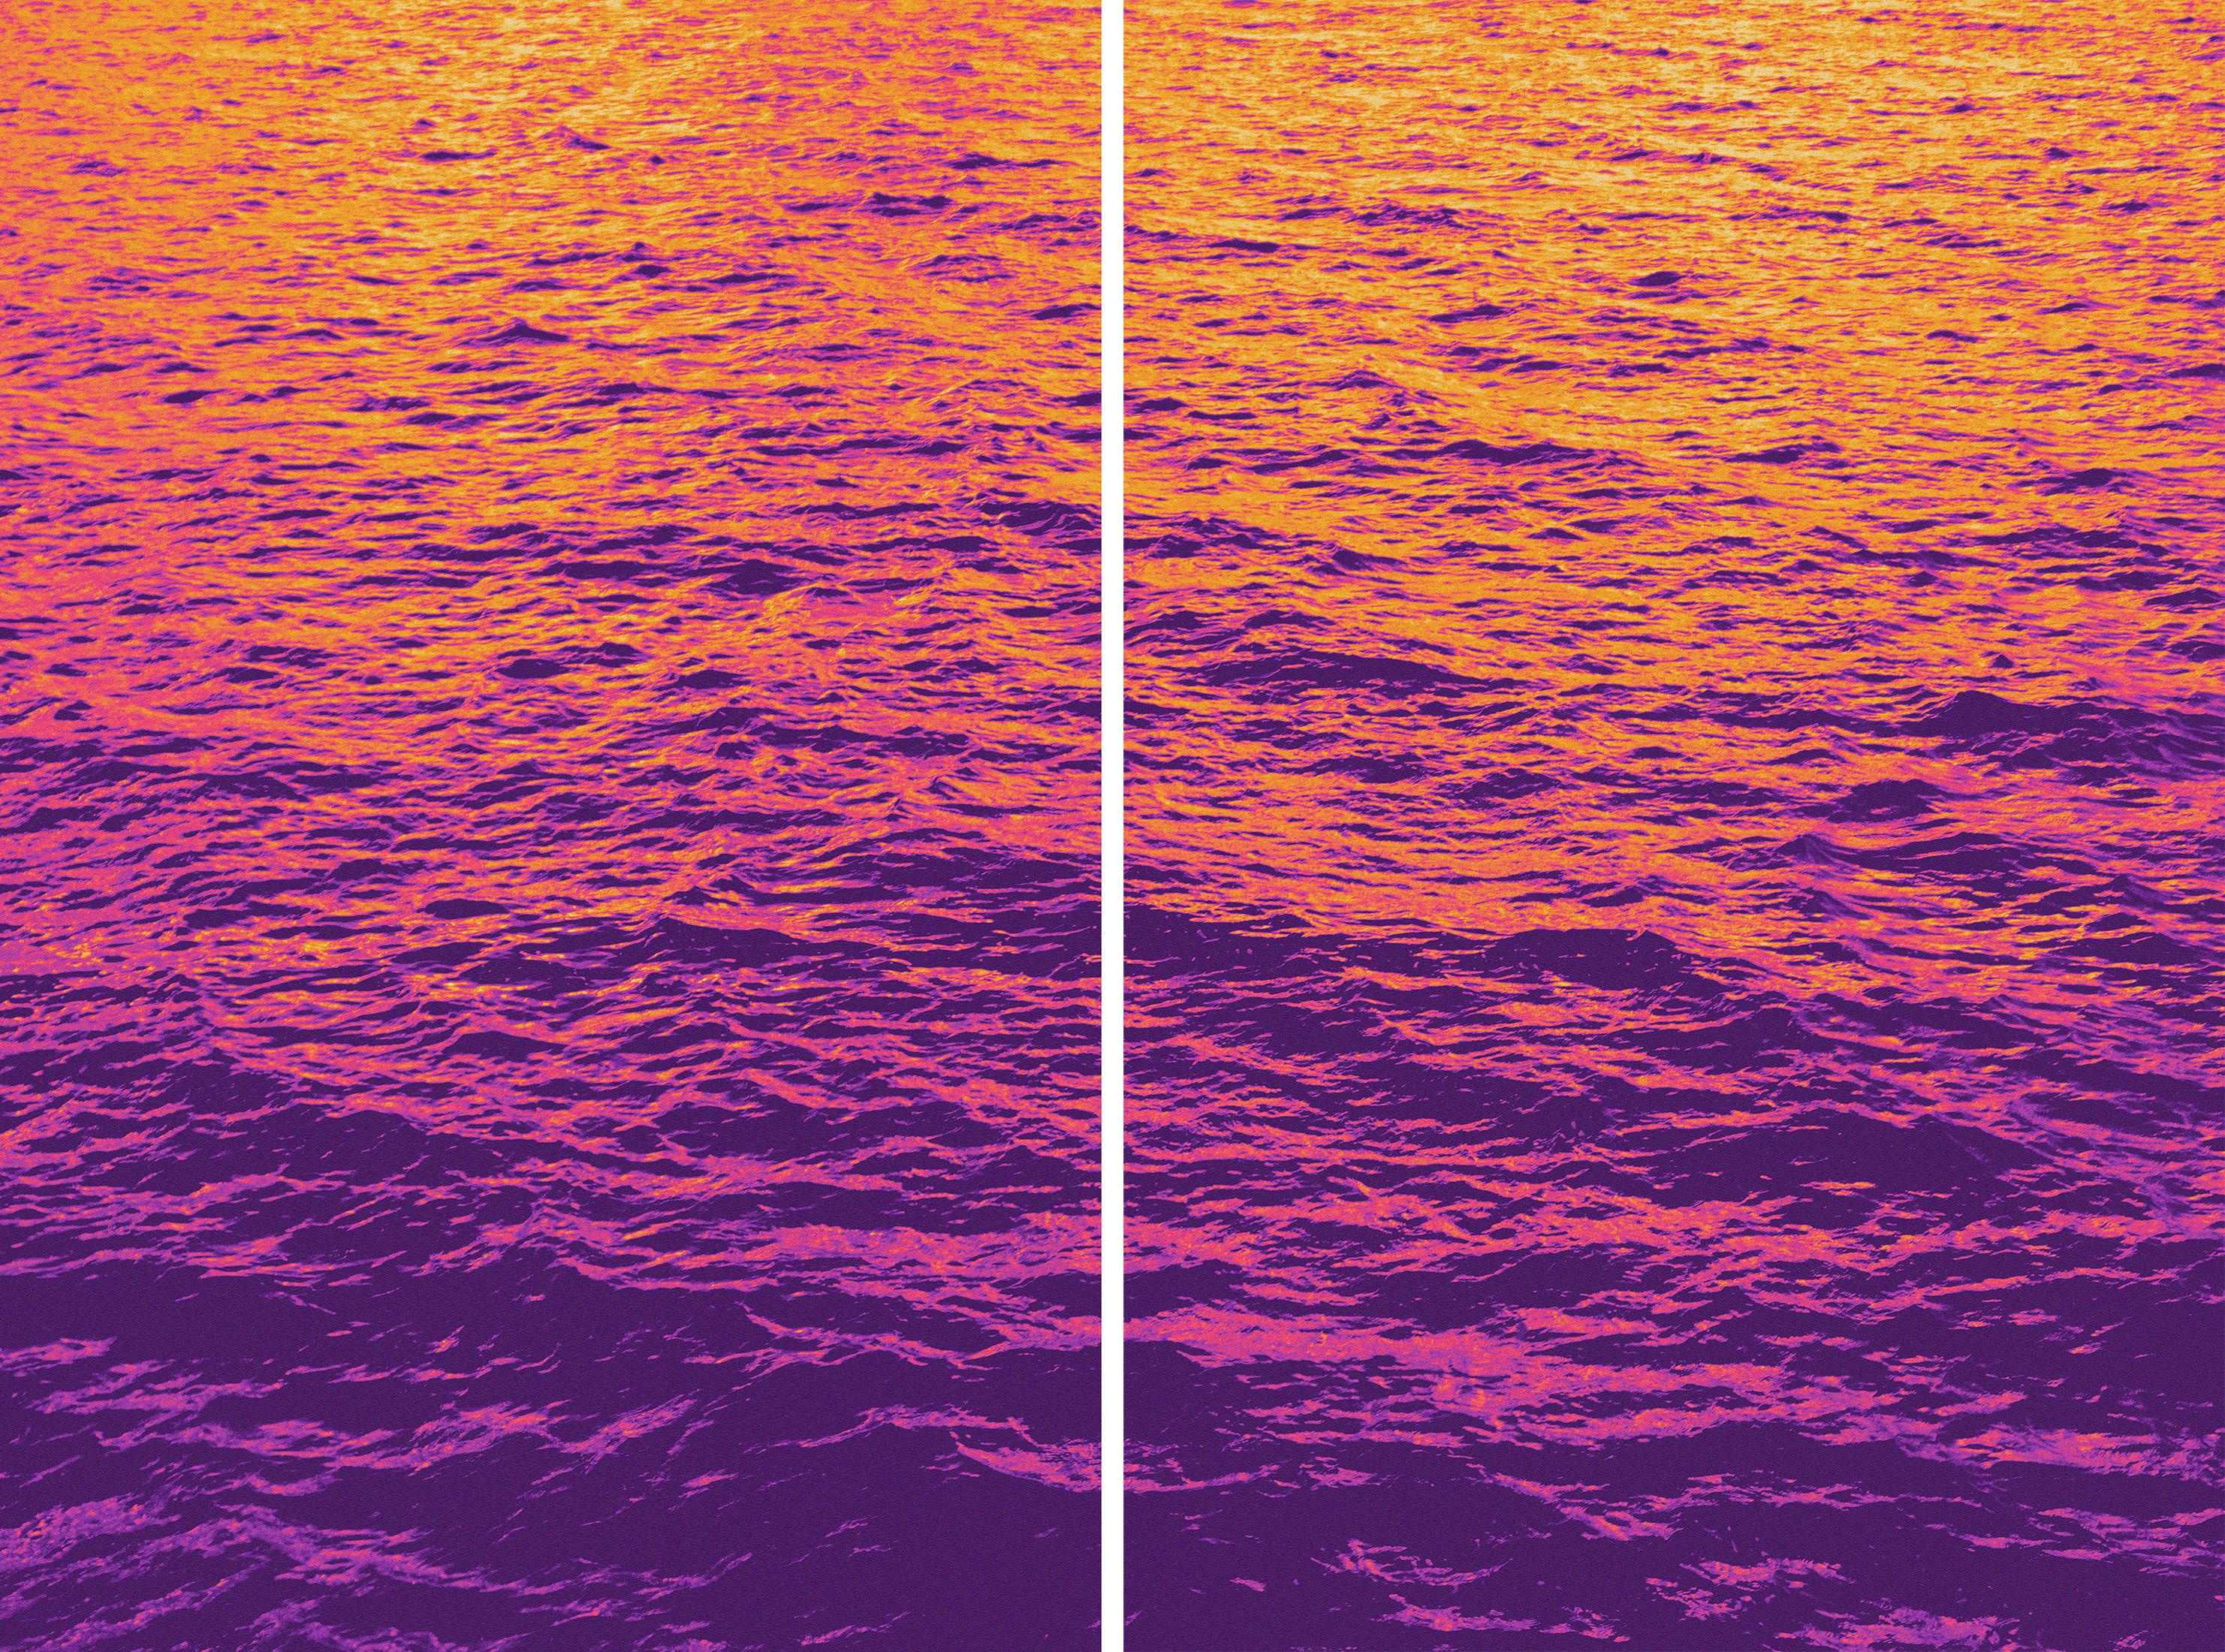 Ryan Rivadeneyra Landscape Print - Burnt Ocean Waters, Abstract Diptych, Golden Yellow Pink, Mediterranean Seascape